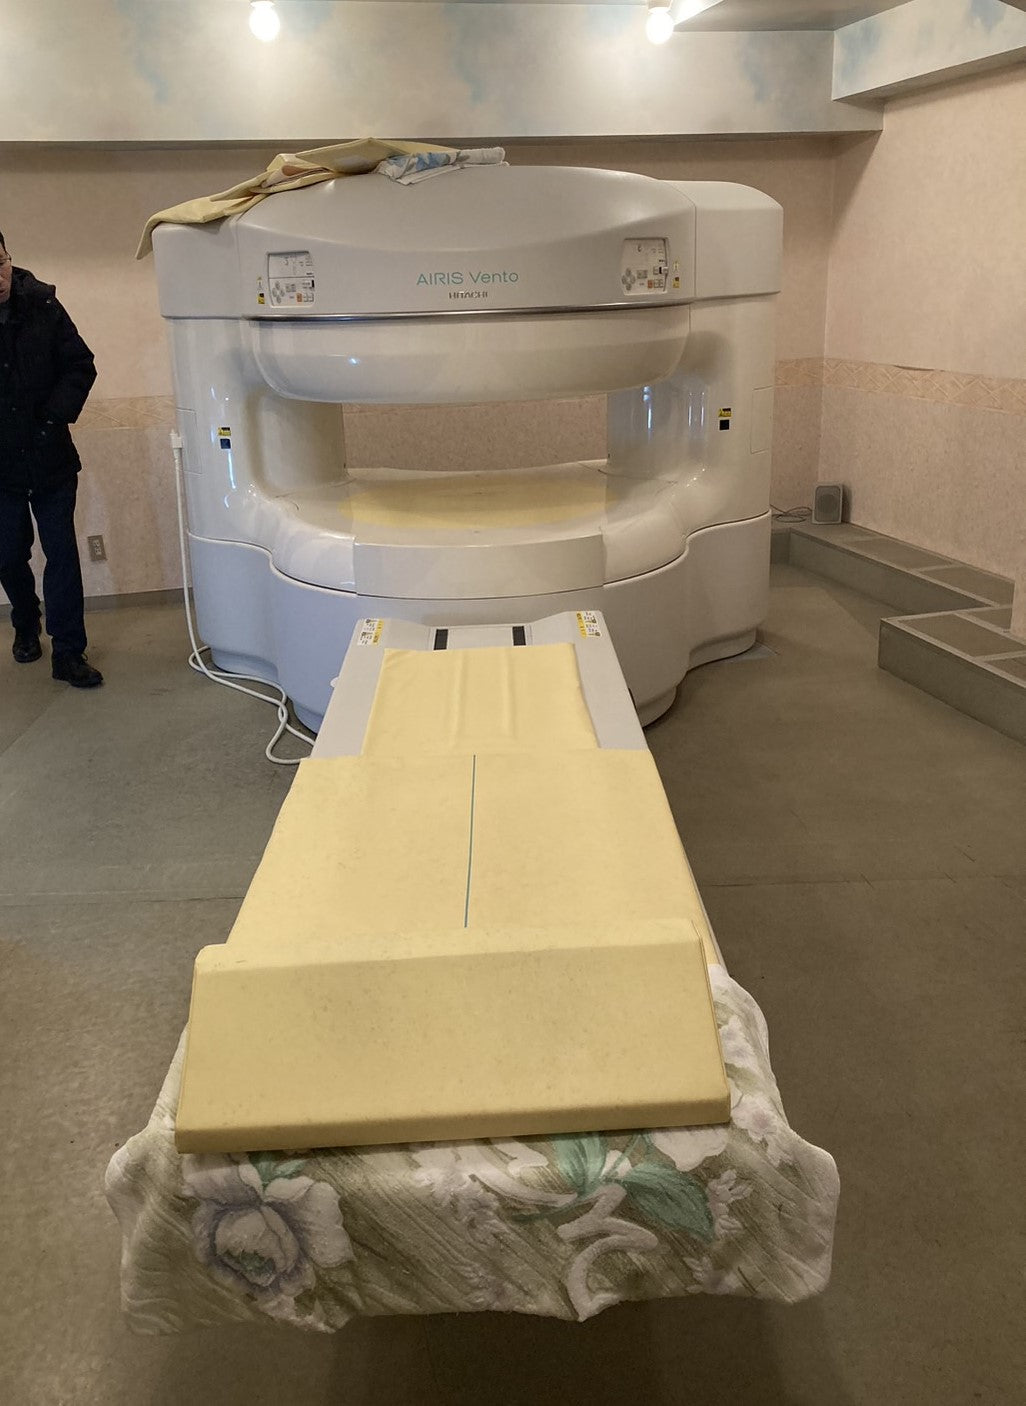 Hitachi Airis Vento Open MRI